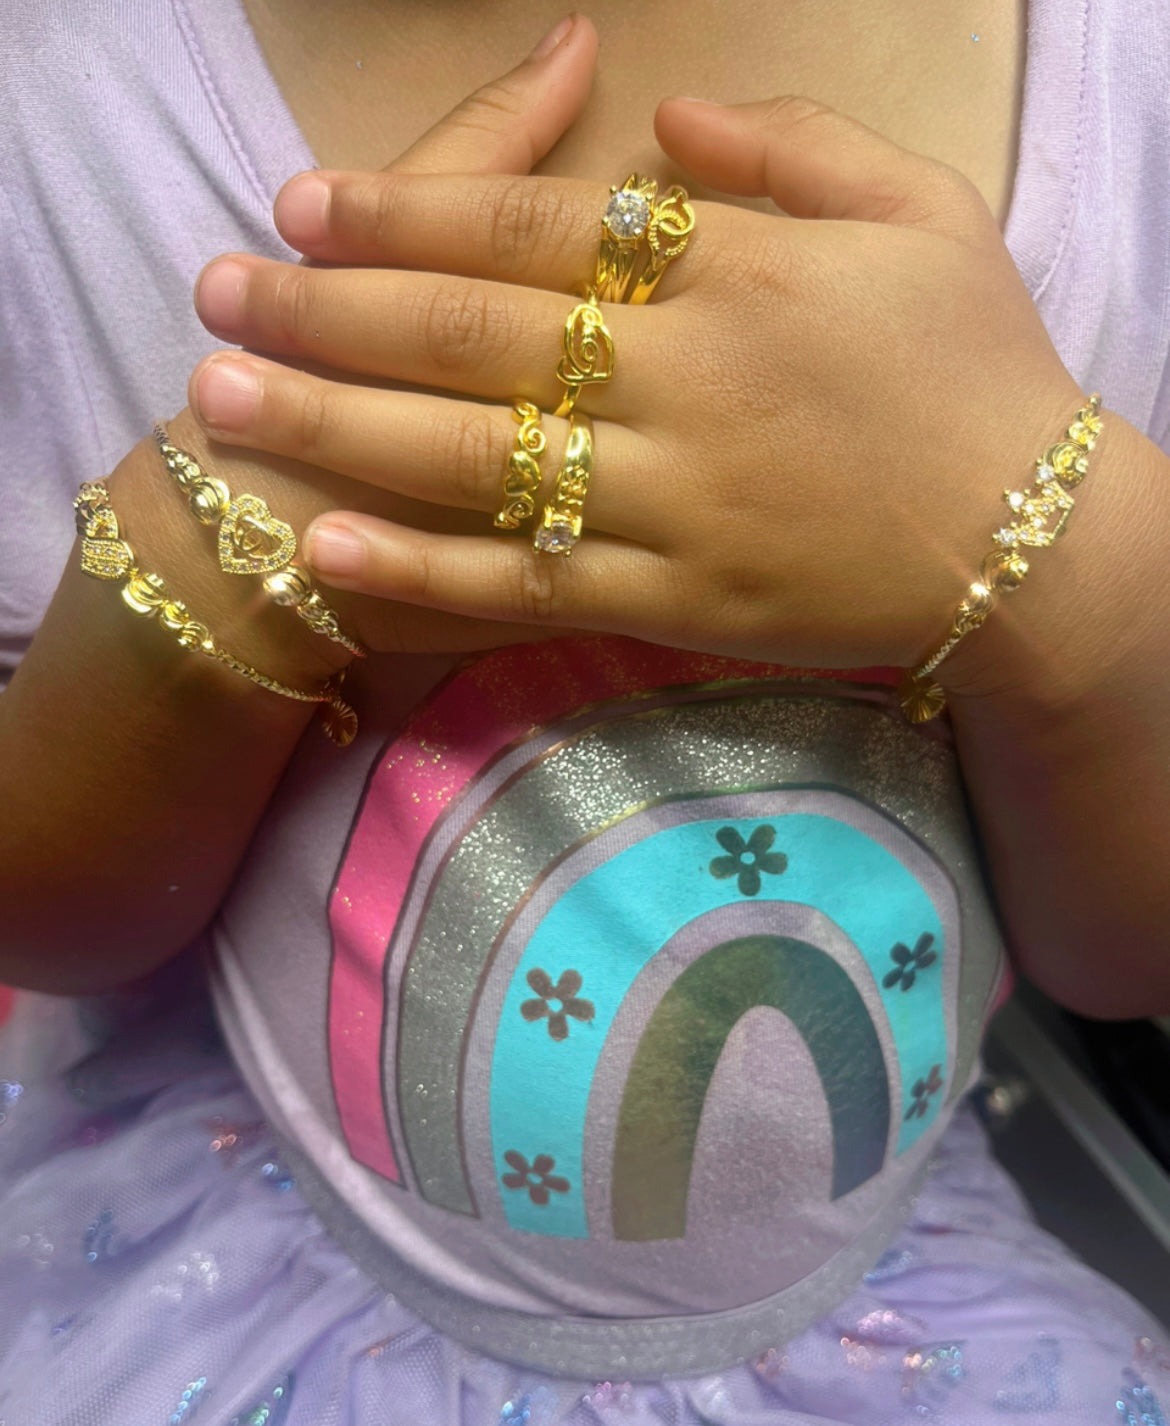 Babygirl rings & charm bangles